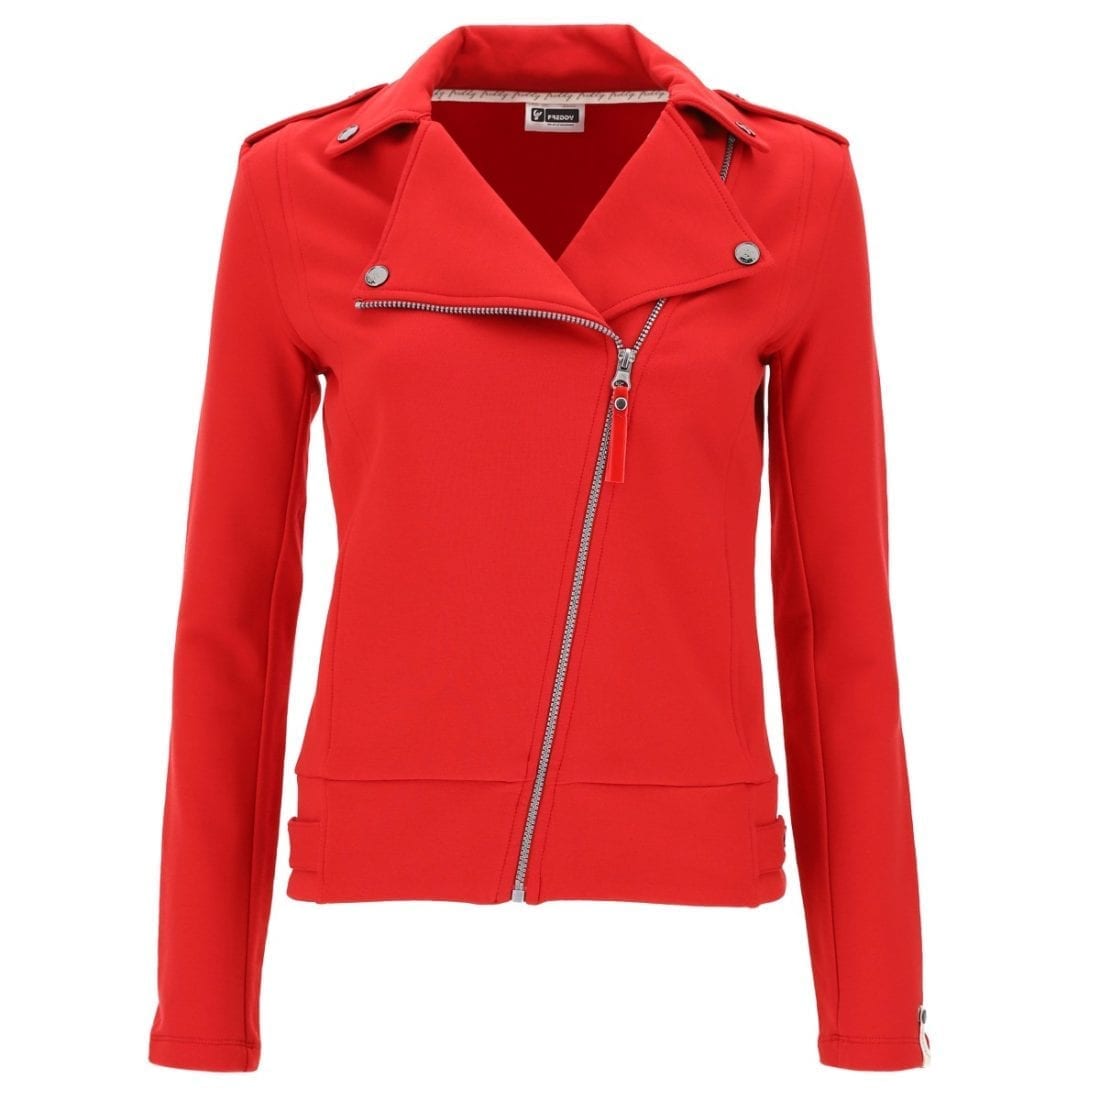 FREDDY WR.UP Jacket Top Millenials – Zipper w/Print – Red